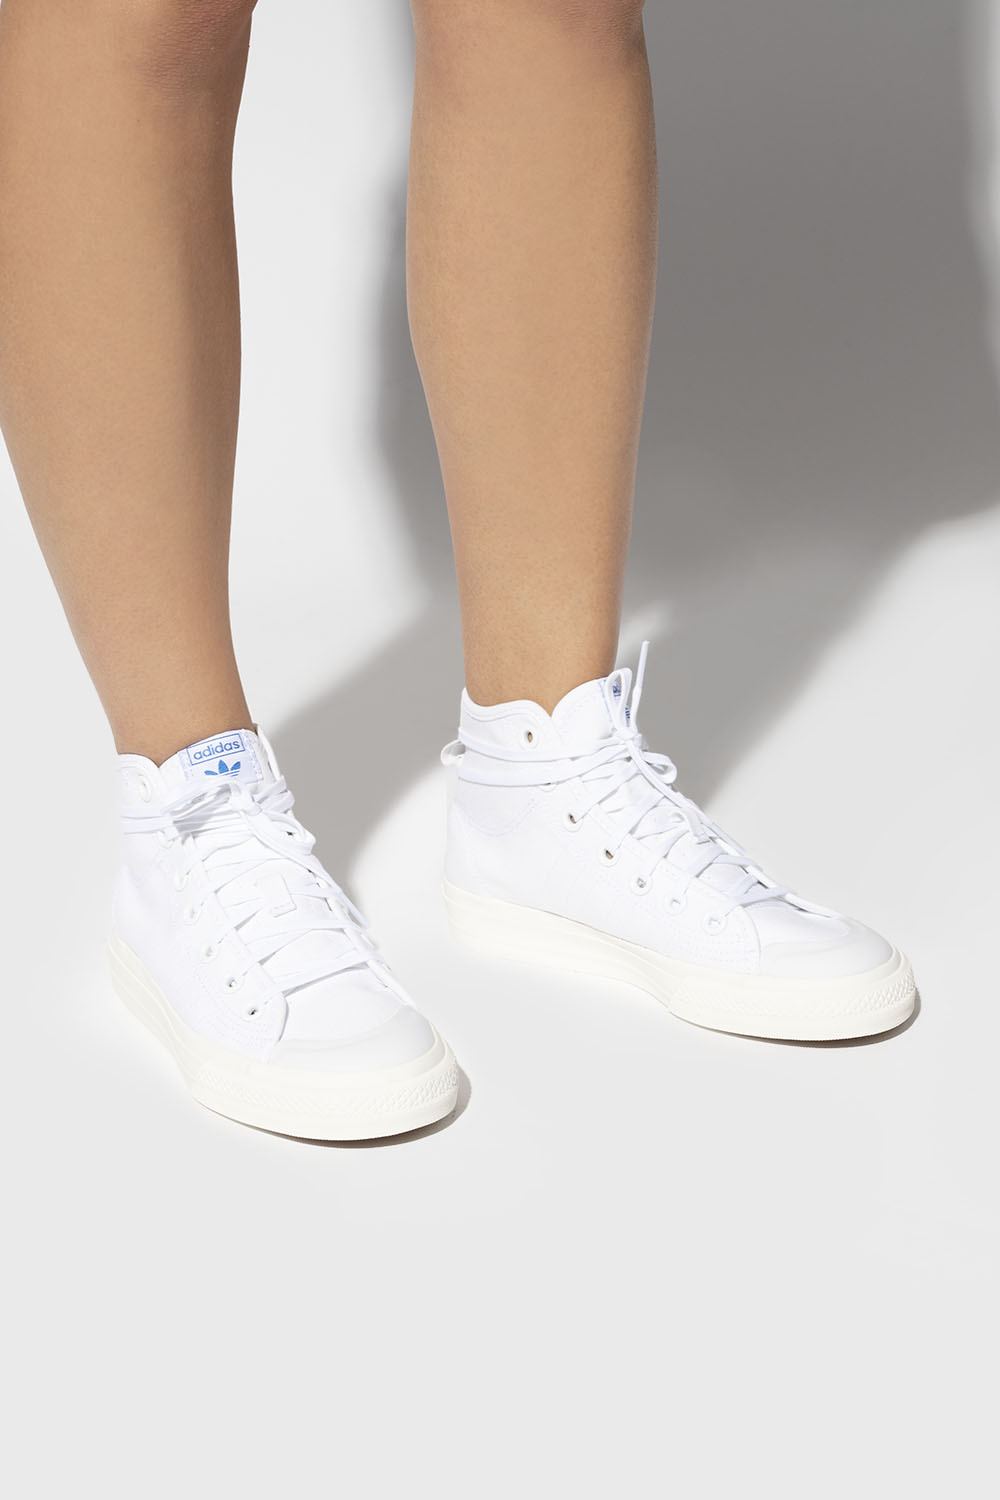 adidas ebay promo - sneakers 2 ADIDAS free Hi RF\' IetpShops code liter Finland \'Nizza top - - Originals high